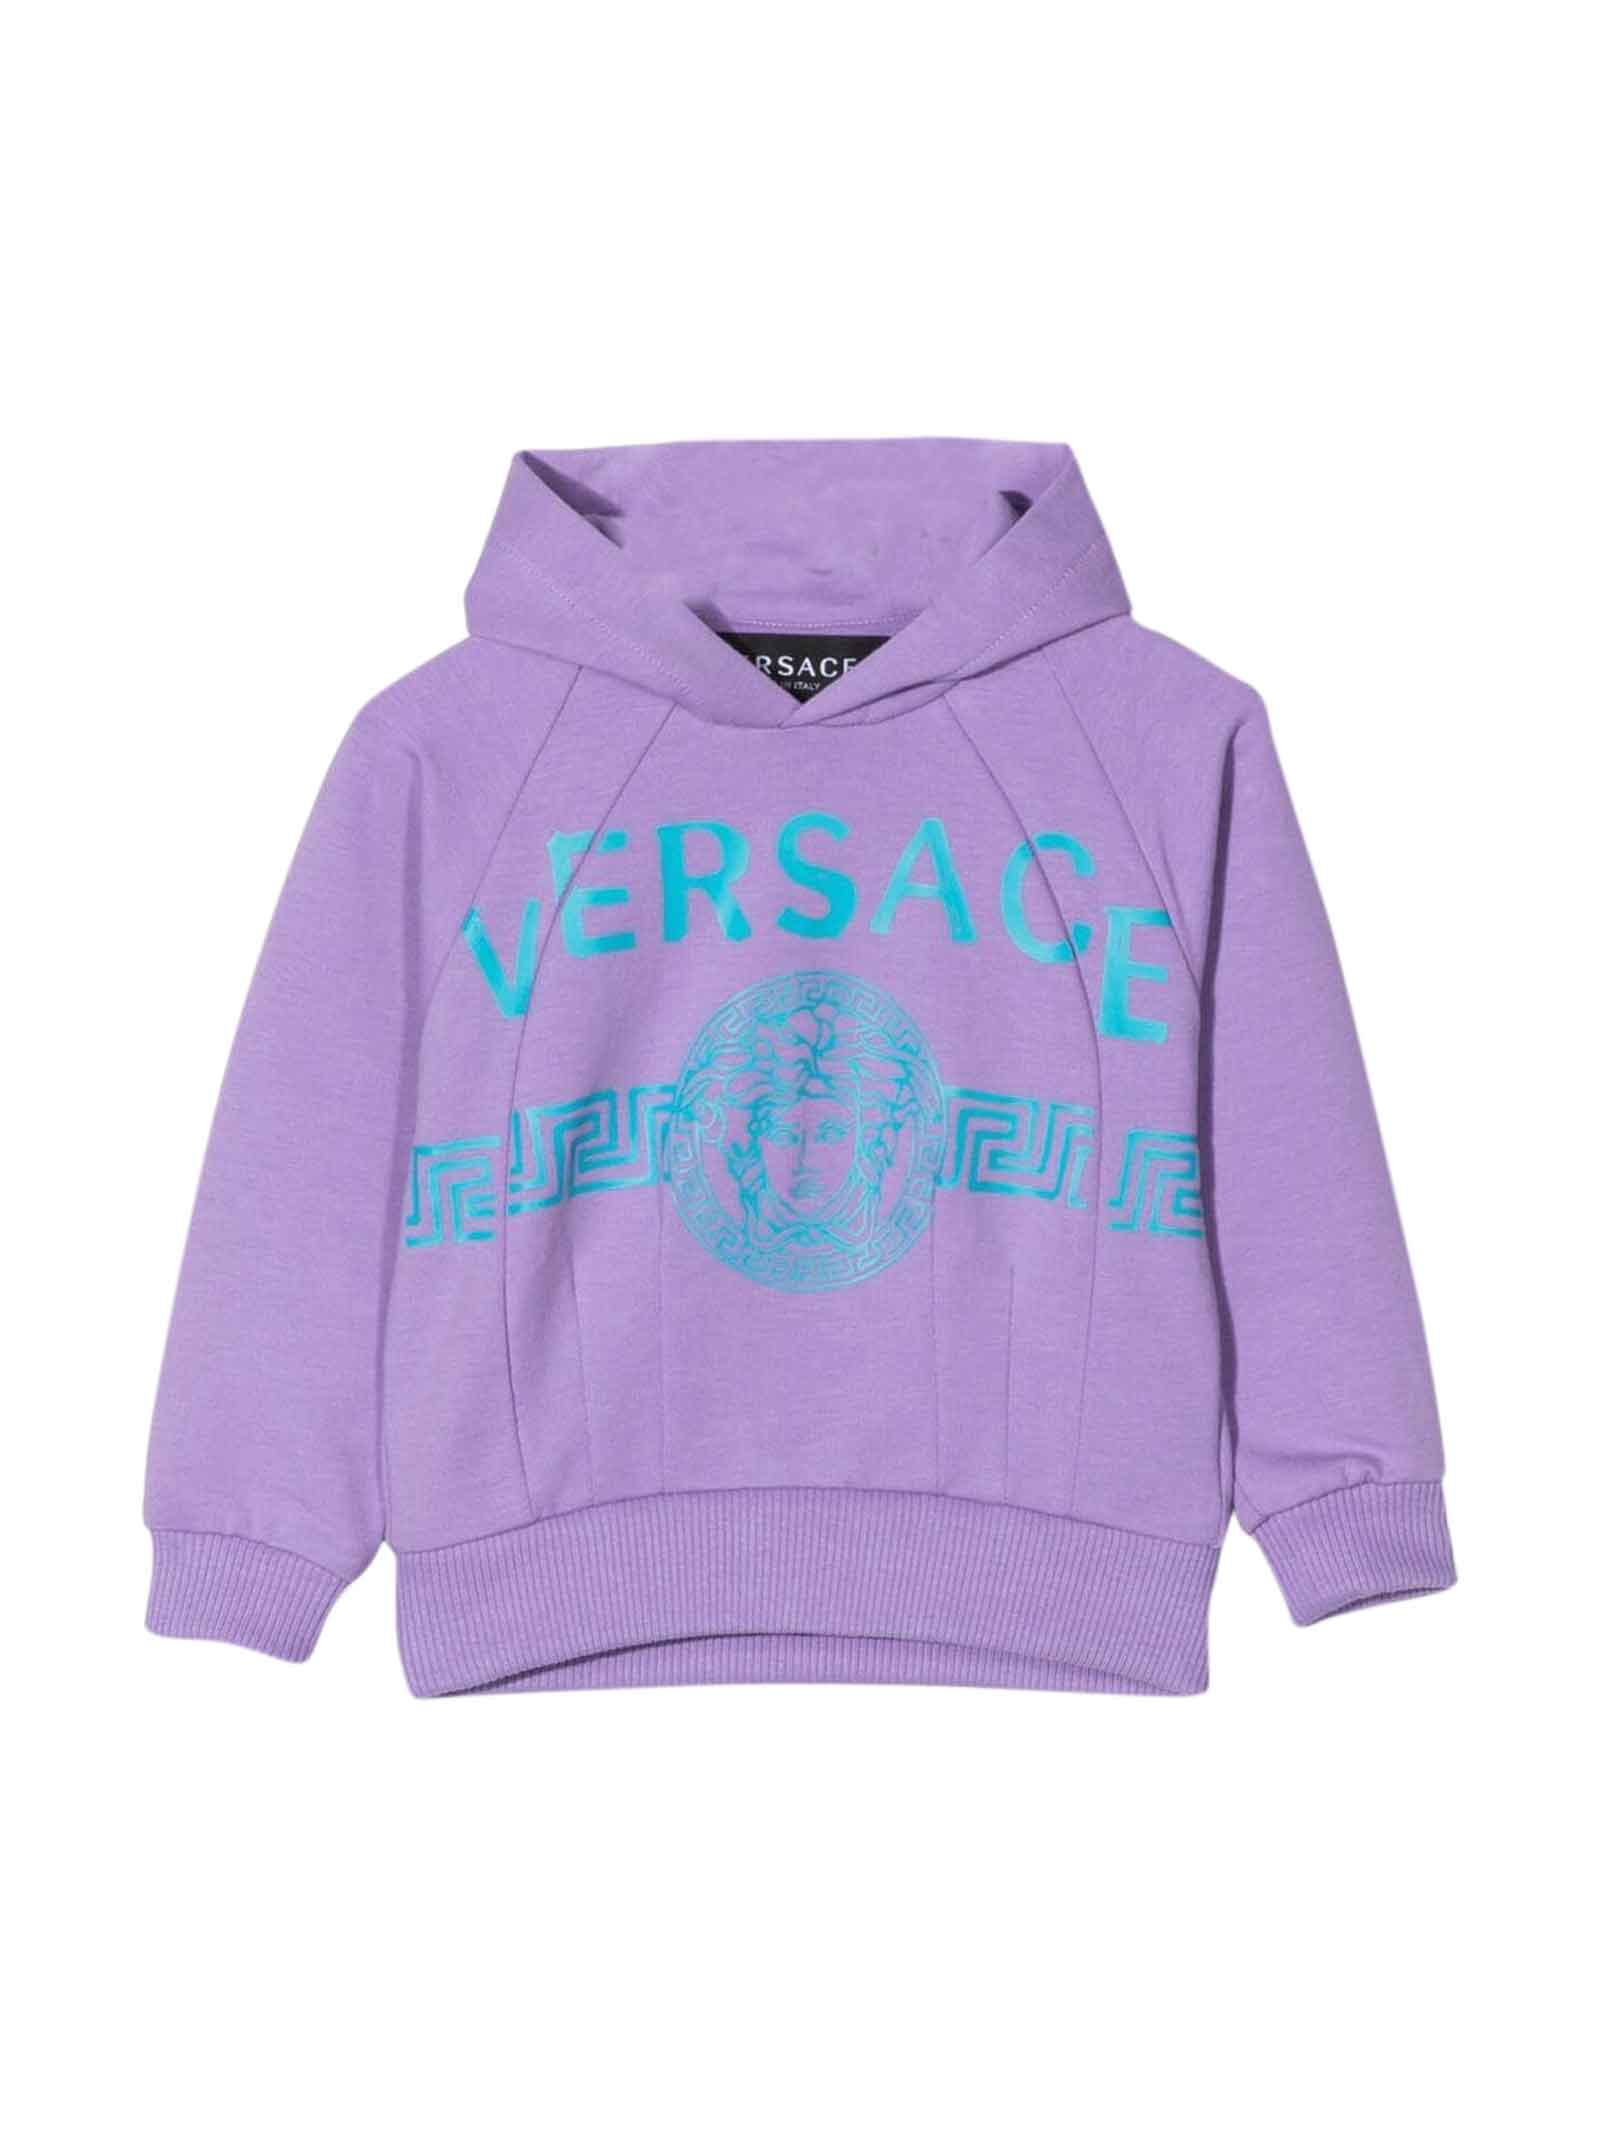 Versace Purple Sweatshirt With Hood And Light Blue Print Kids